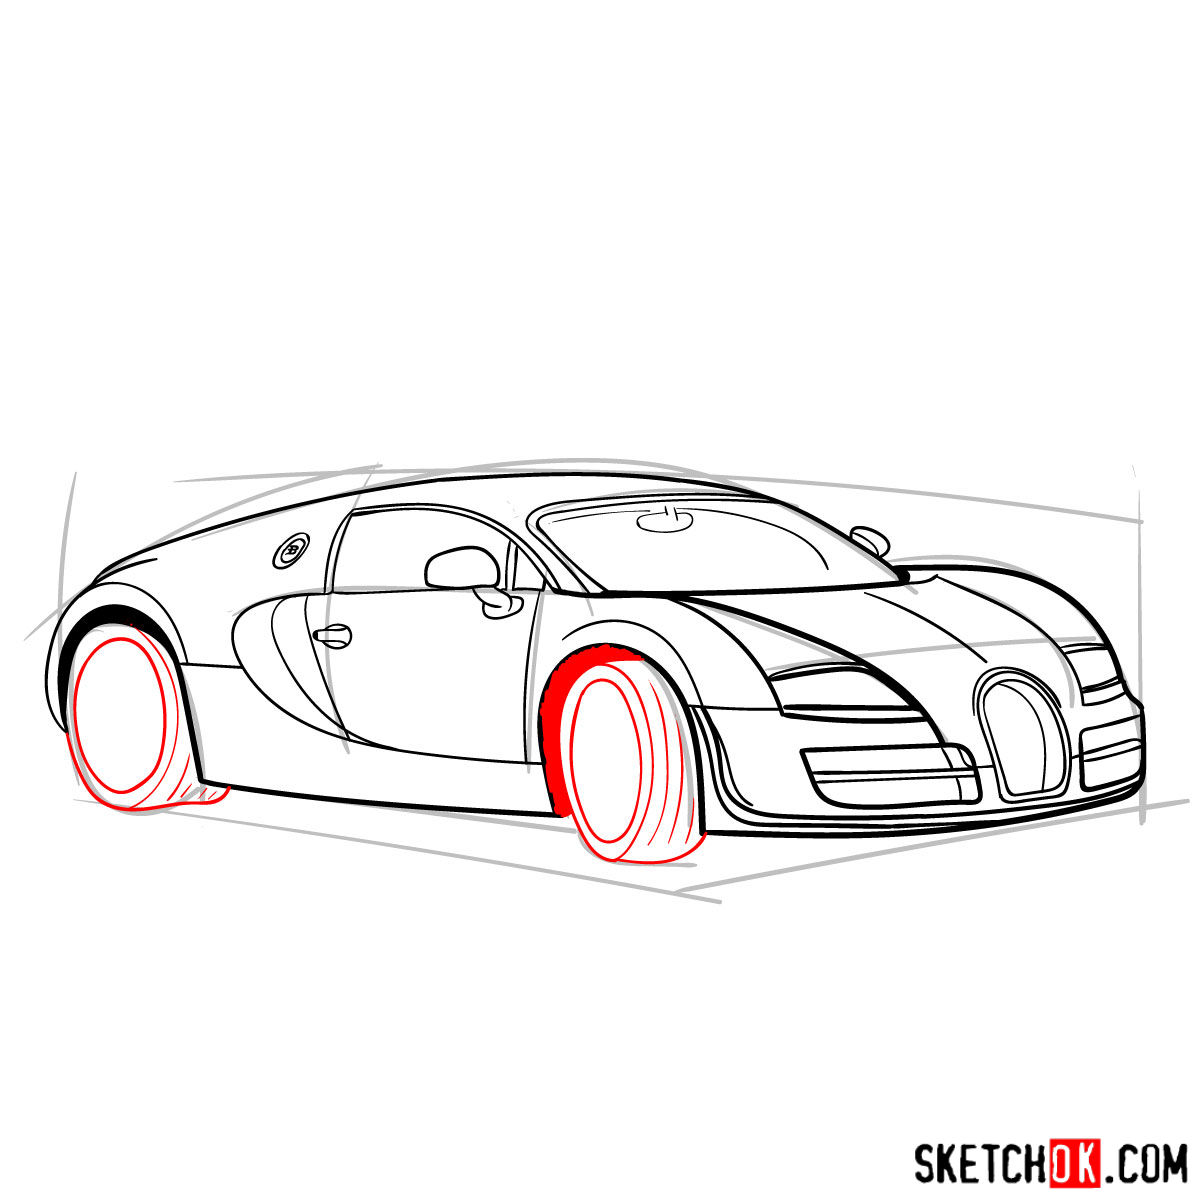 How to draw Bugatti Veyron 16.4 Super Sport - step 11